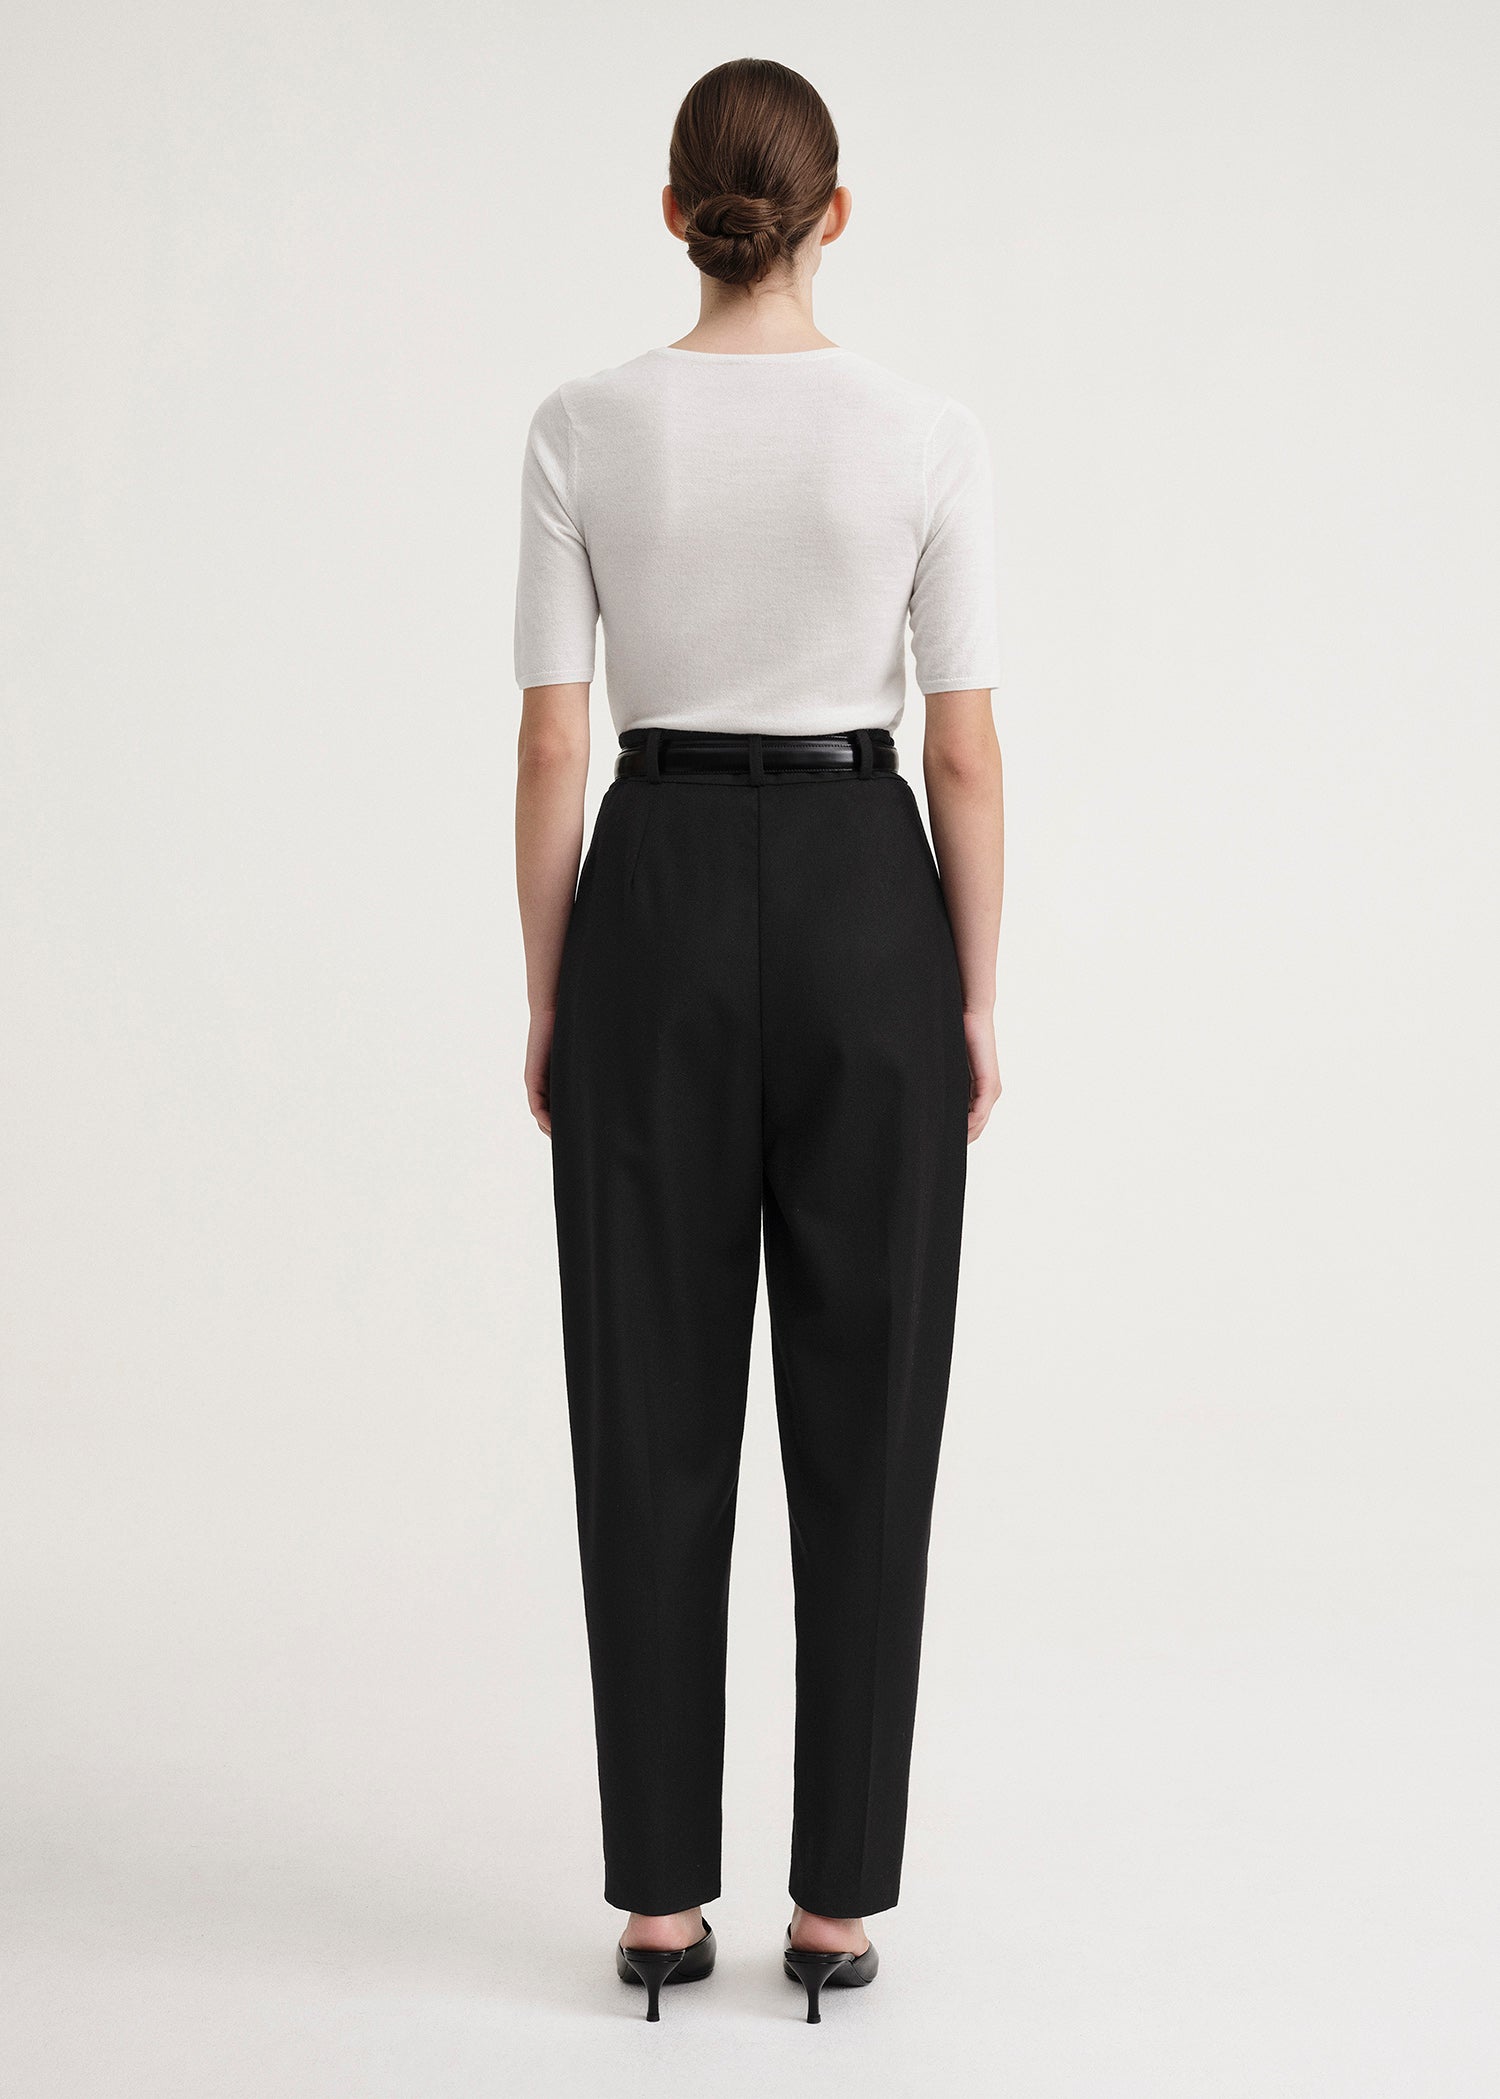 Buy Black Trousers & Pants for Women by VISIT WEAR Online | Ajio.com